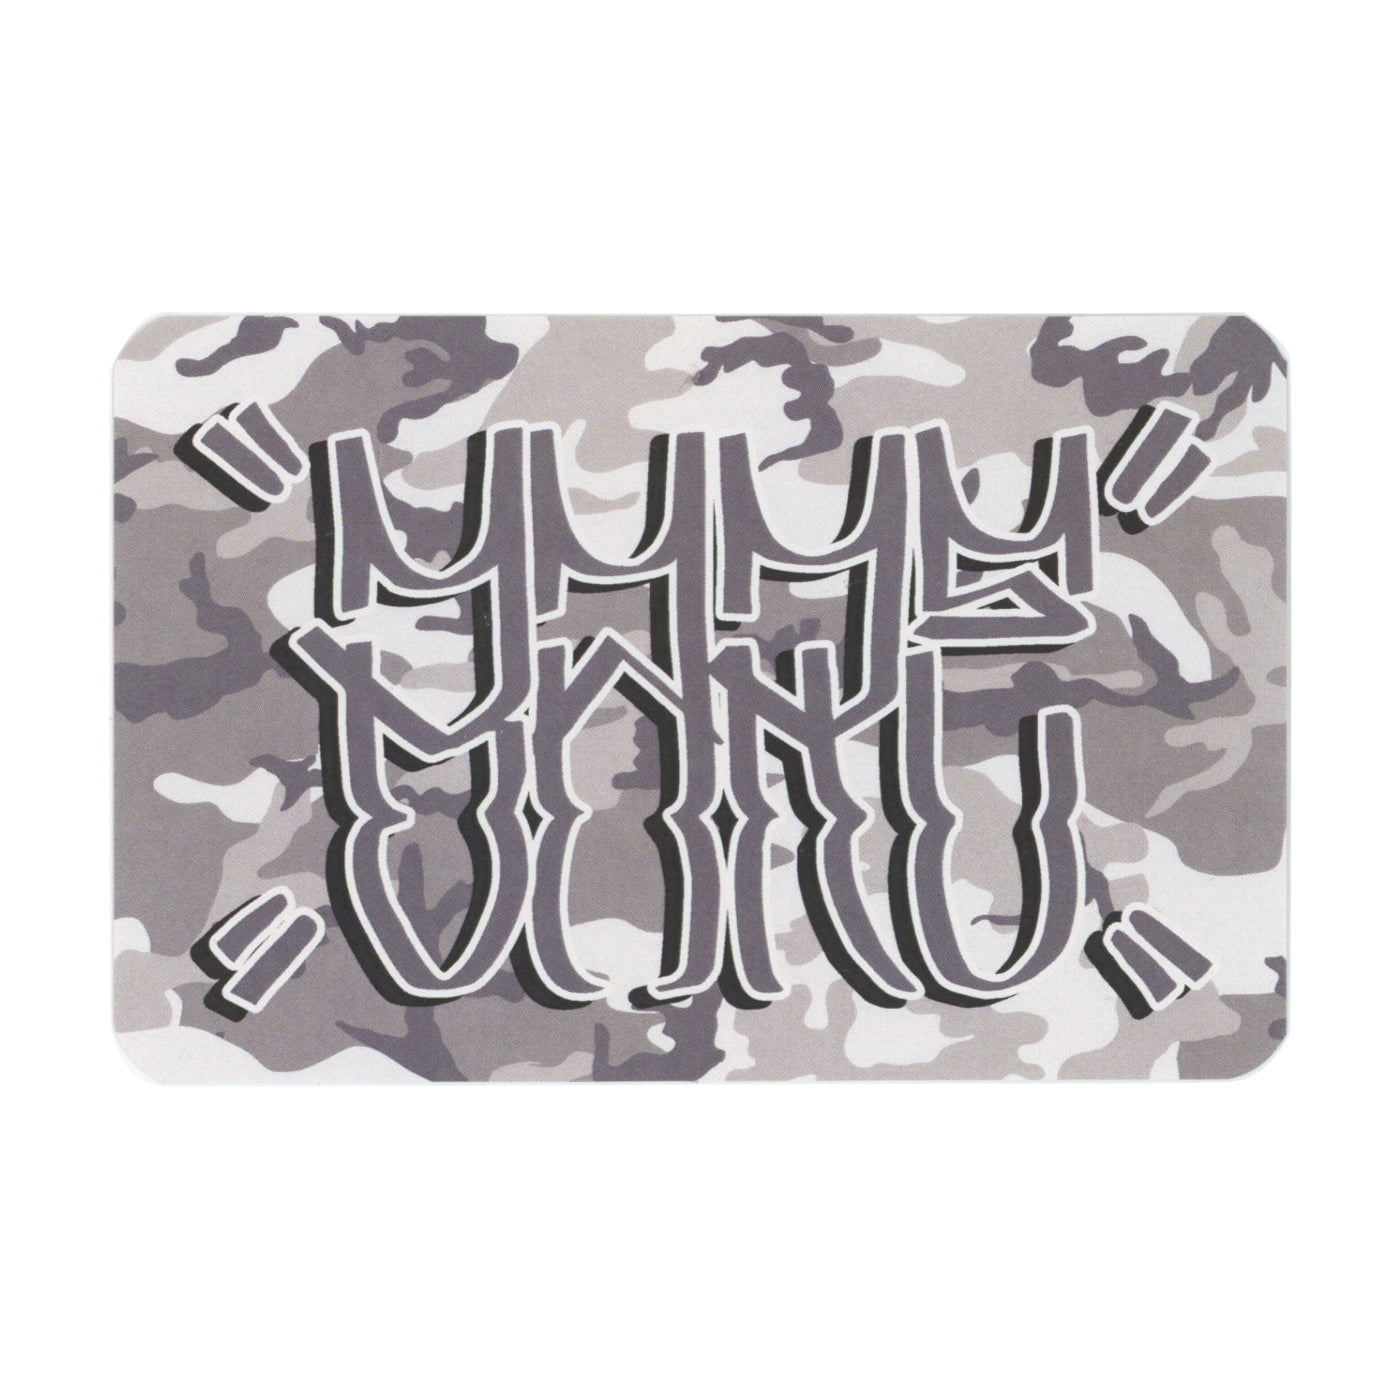 Bareone Camouflage Gray Sticker